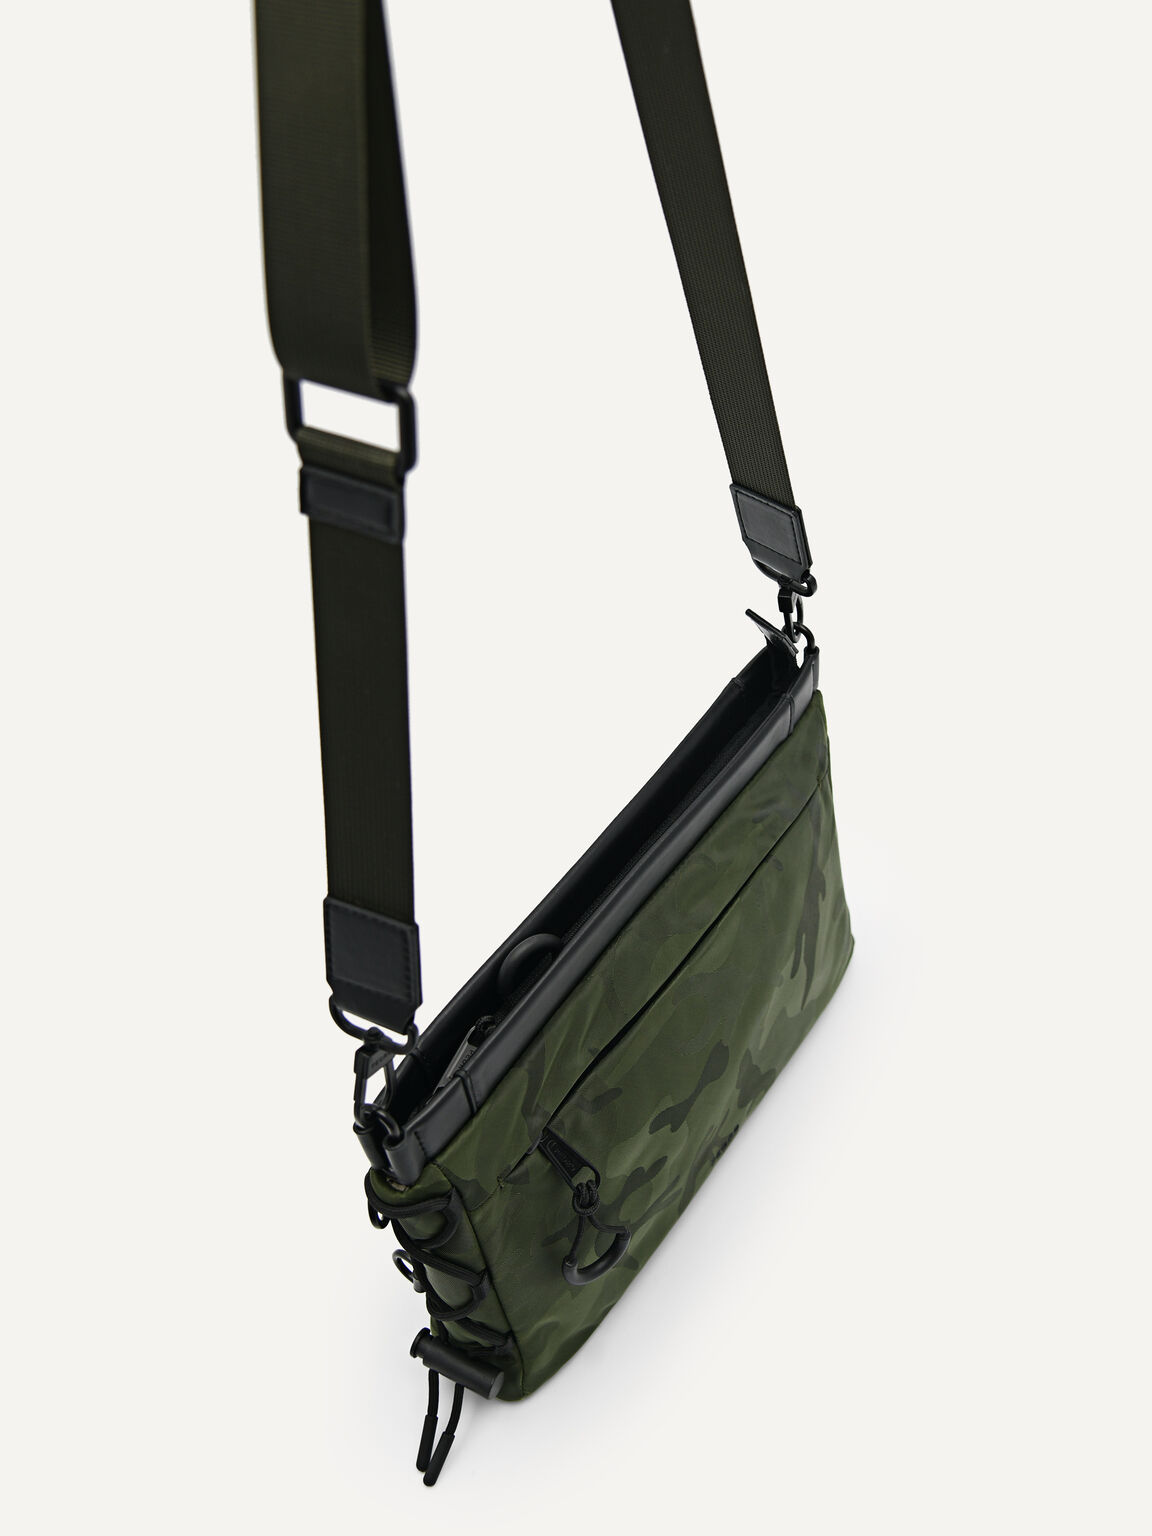 Post Clutch Bag, Military Green